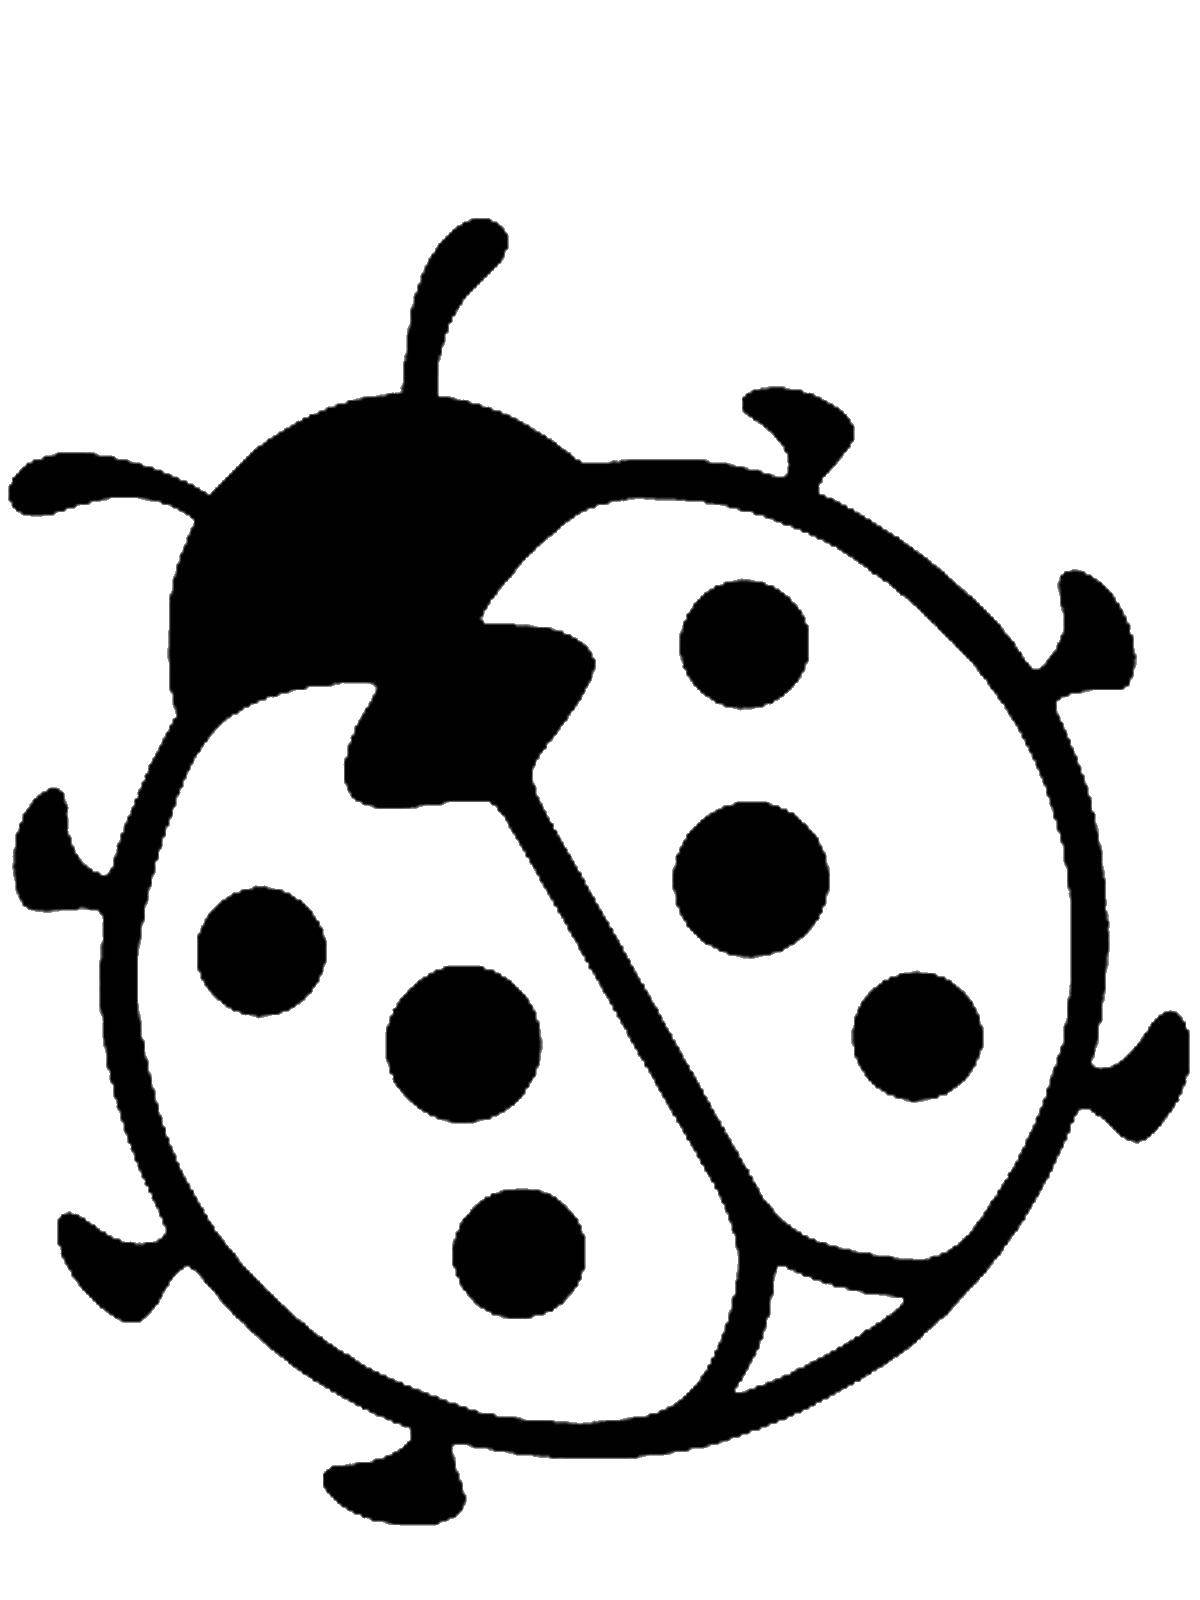 Coloring Ladybug. Category Insects. Tags:  Ladybug.